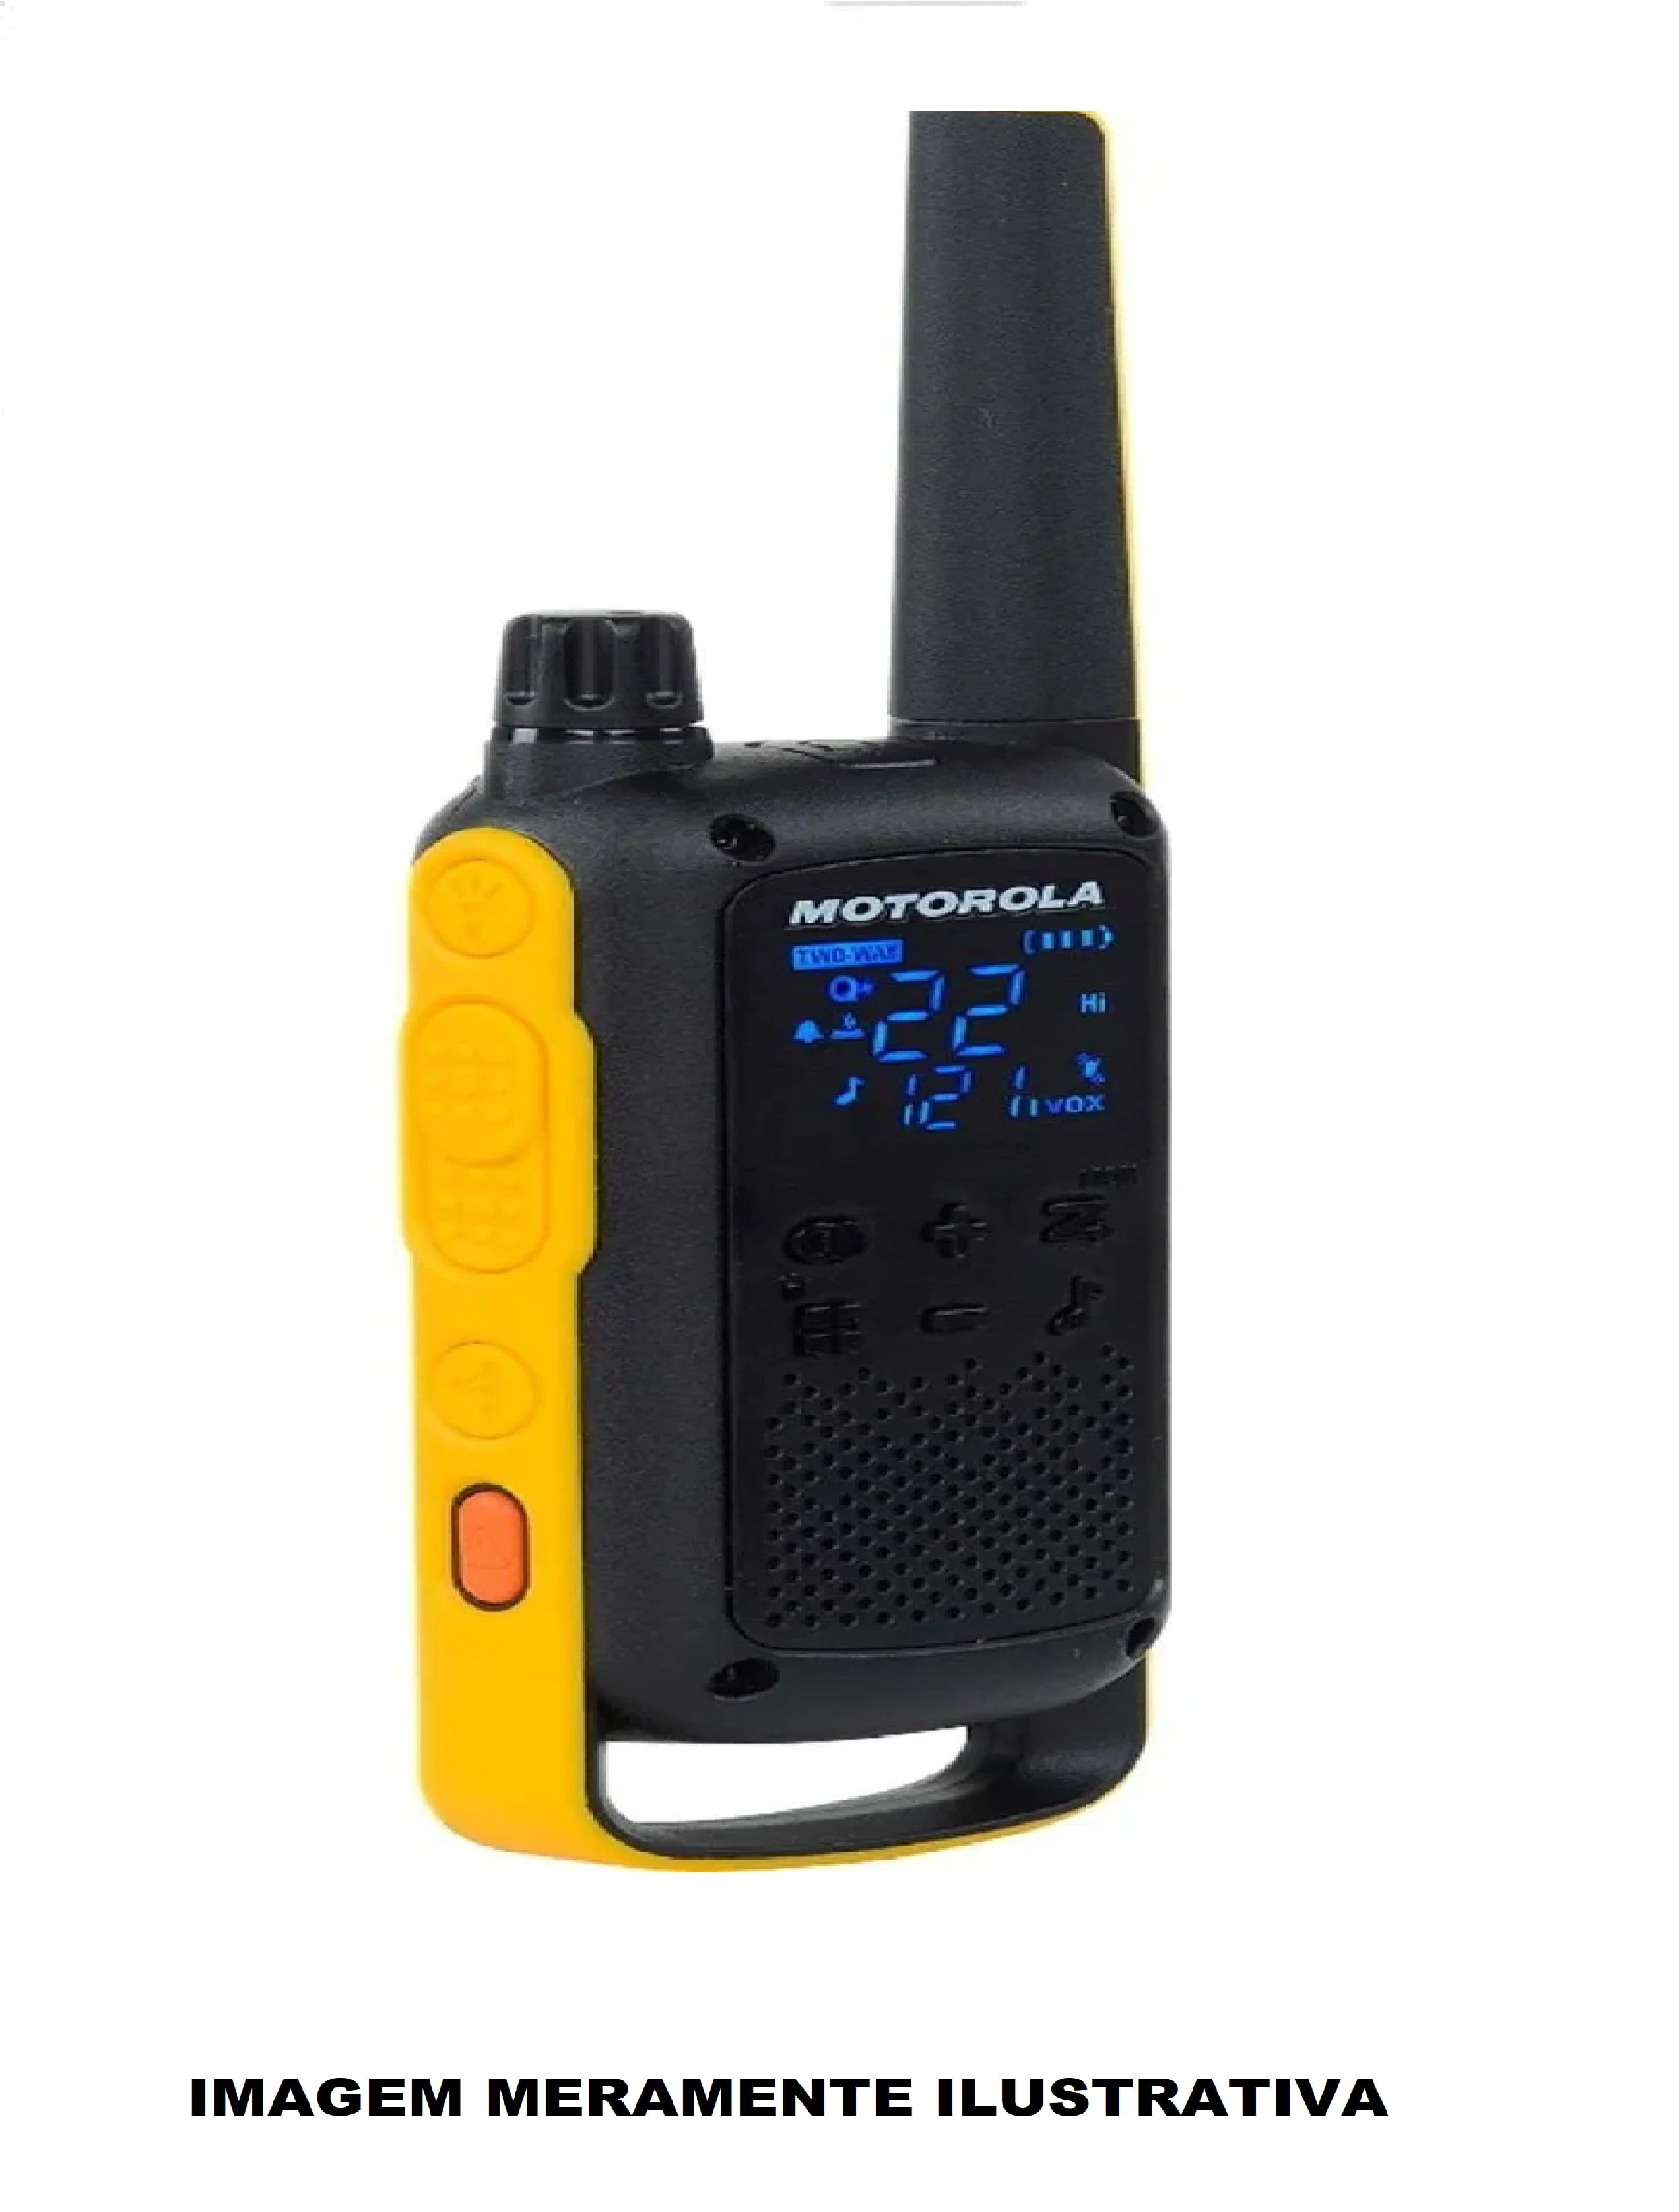 Talkabout Motorola T470 Walk Talk Rádio Comunicador Até 56km